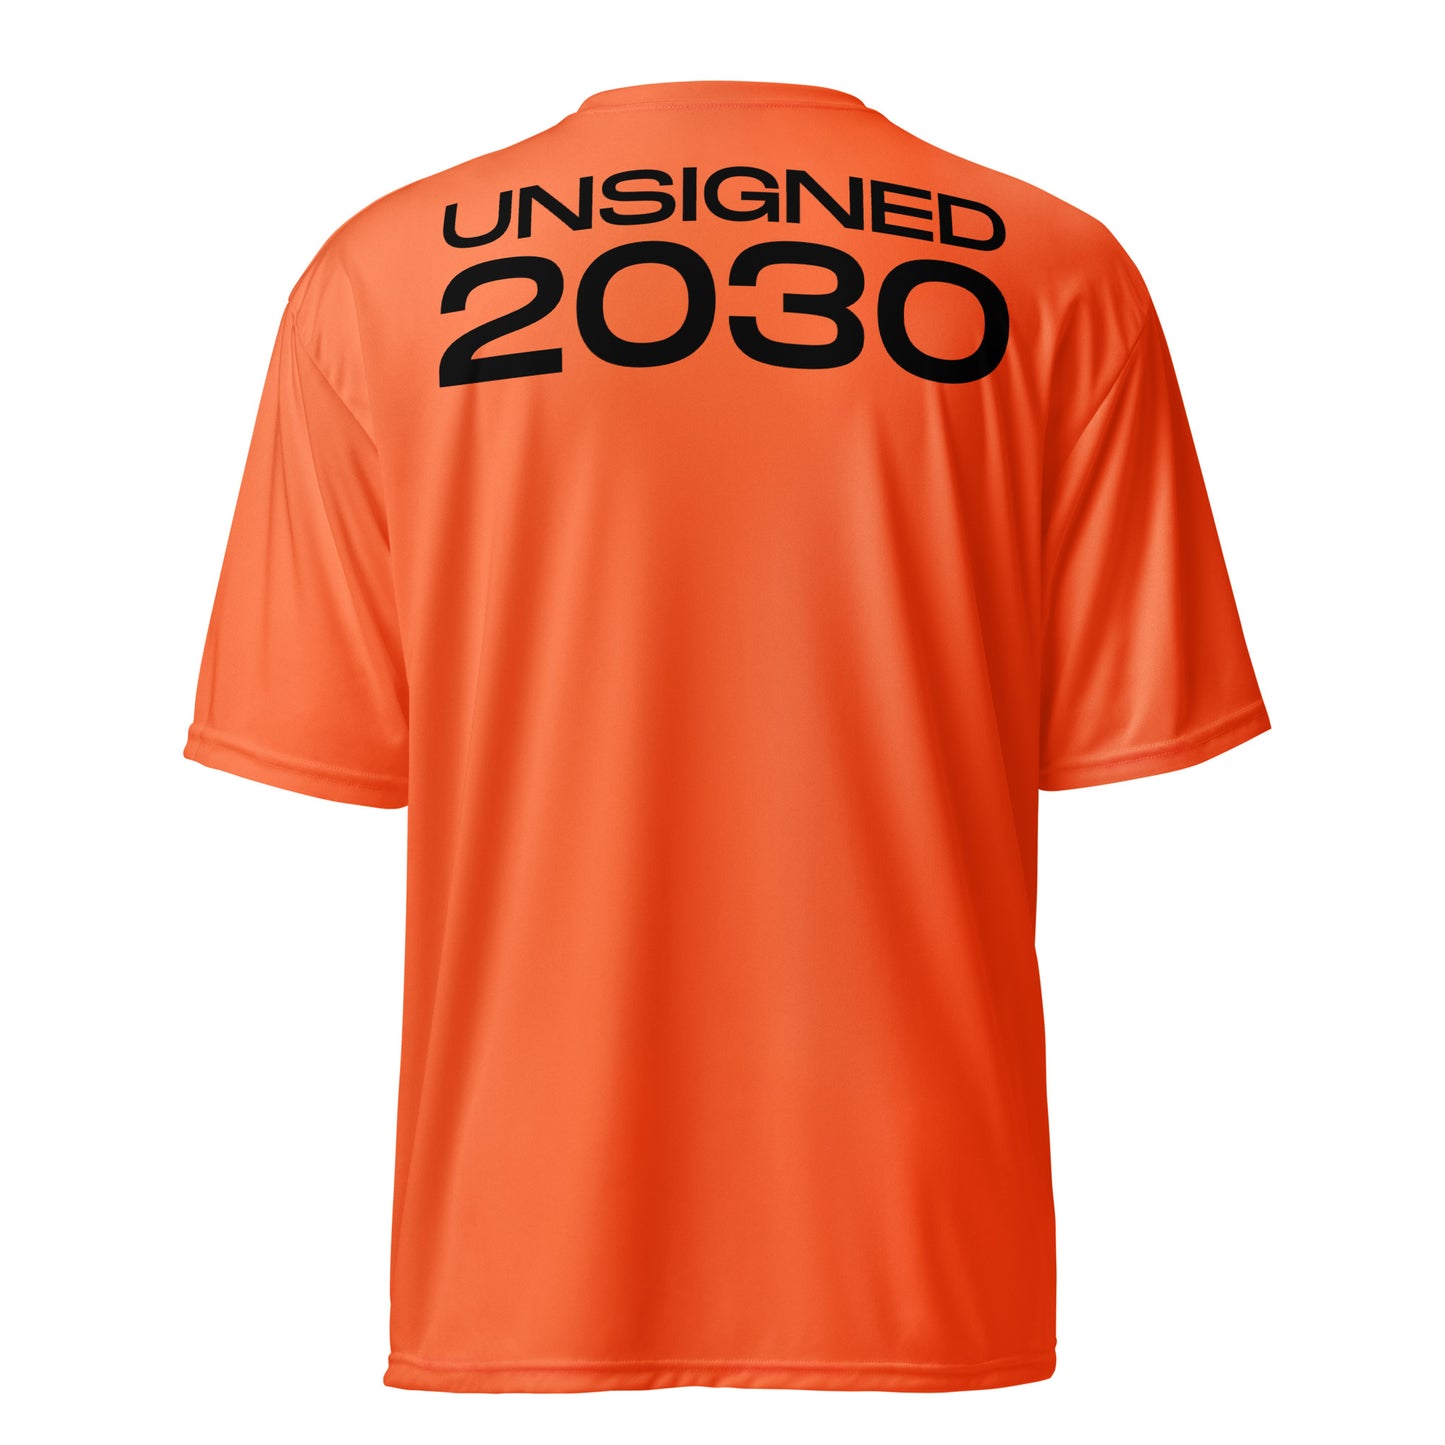 2030 Setter Recruit - Unisex performance crew neck t-shirt